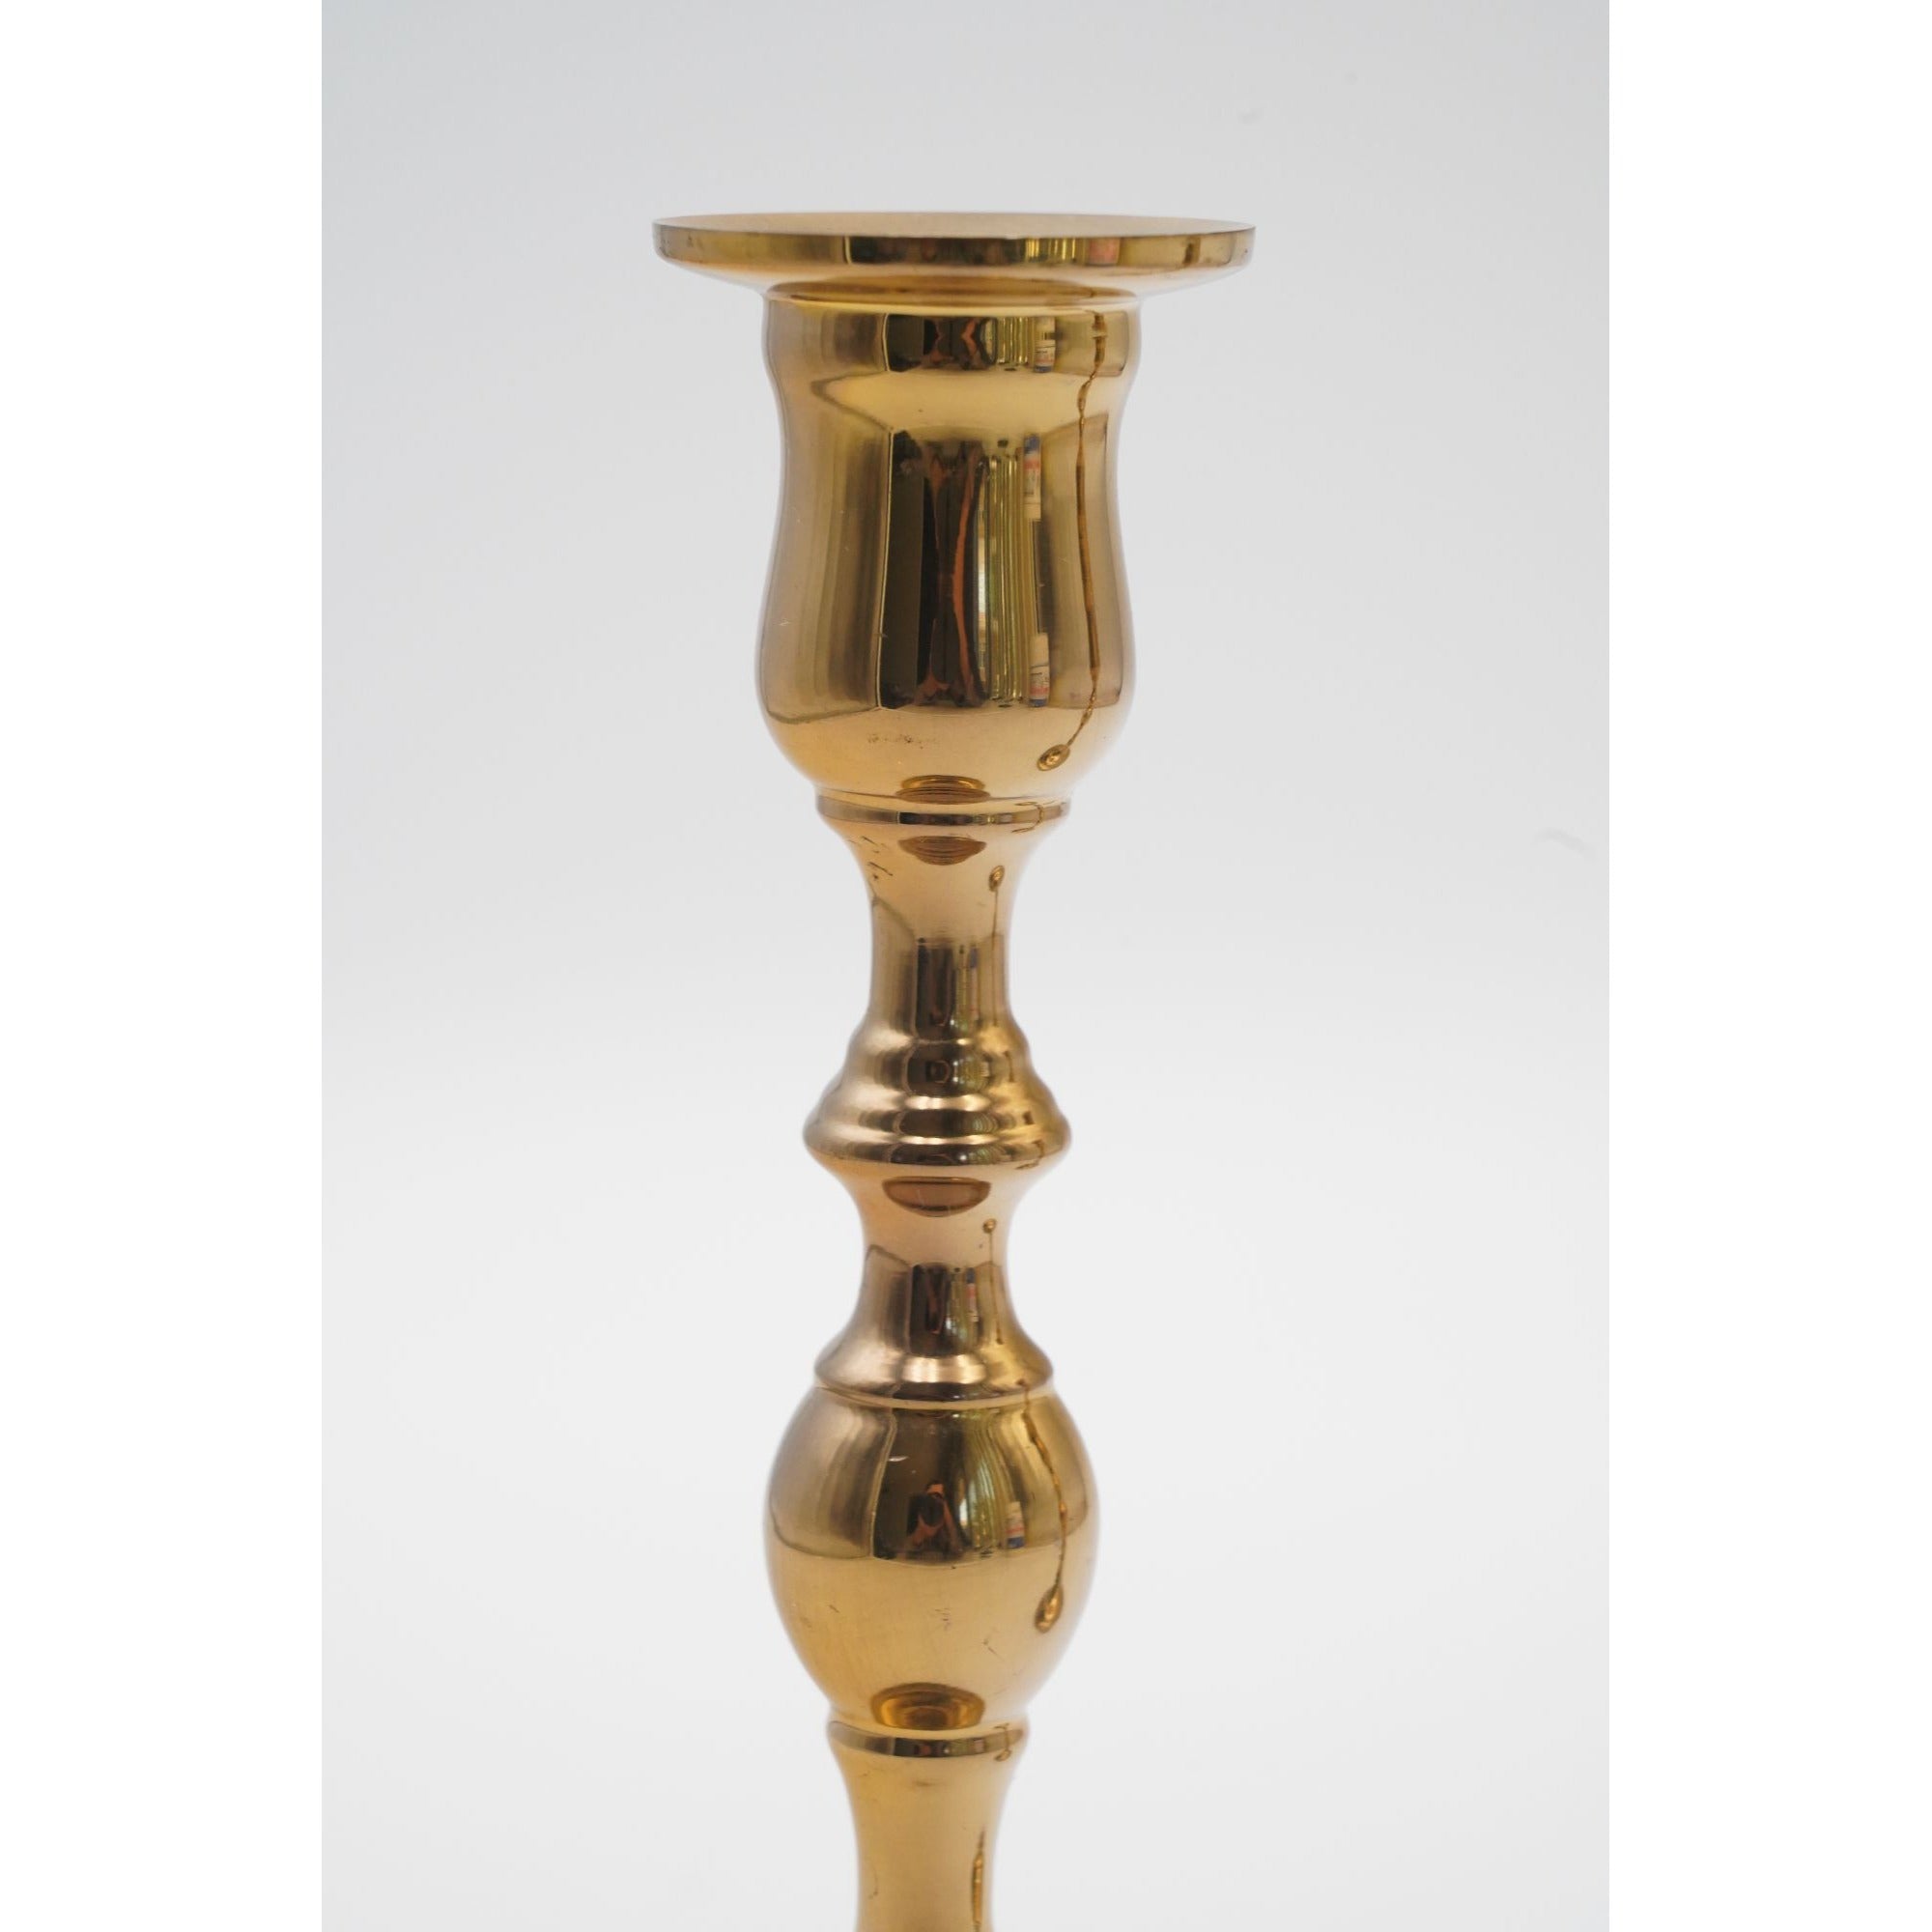 Vintage Brass Candle Holders - Elegant Pair of Candlesticks 7.5" H